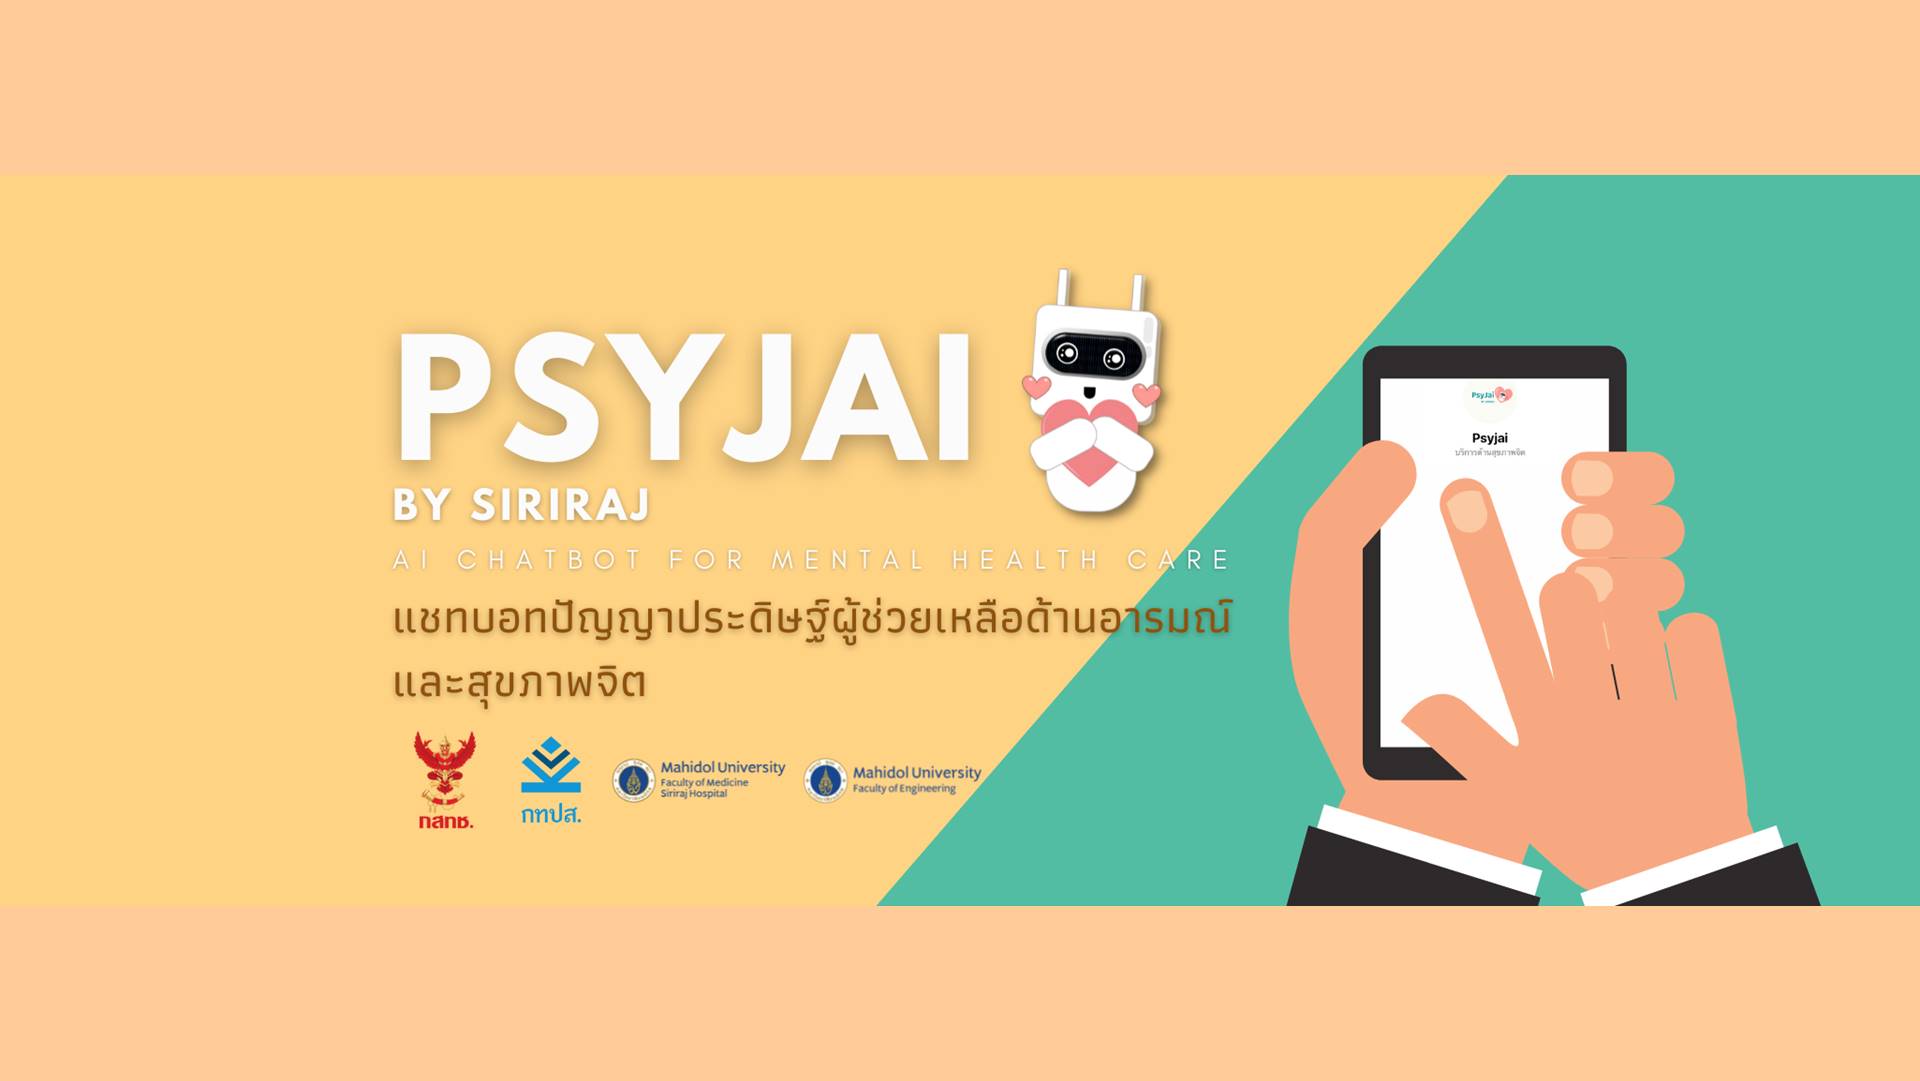 Siriraj Launched “PSYJAI” A.I. ChatBot For Mental Health